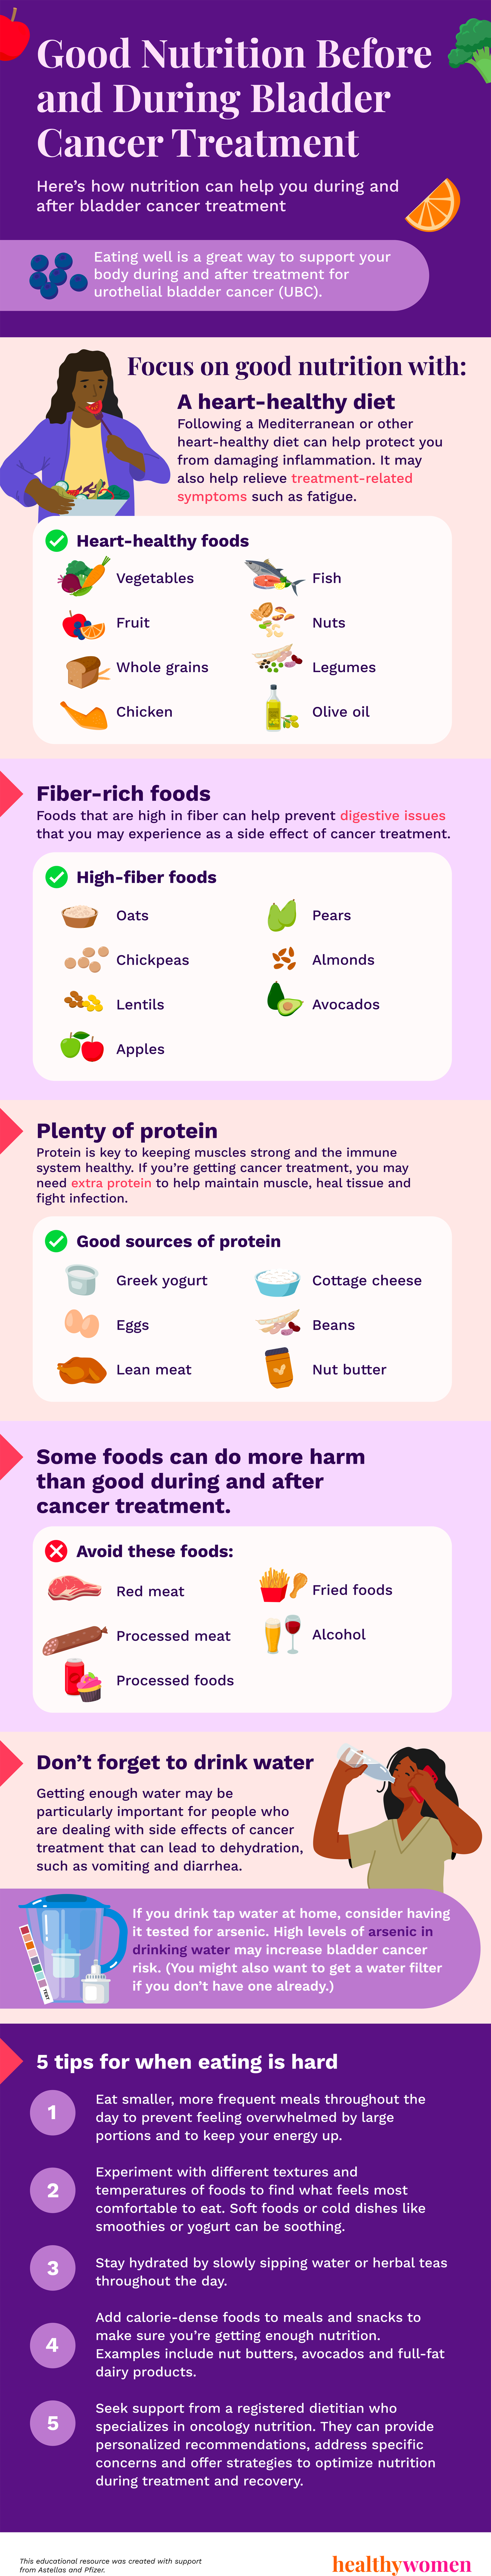 UBC-Nutrition-Infographic